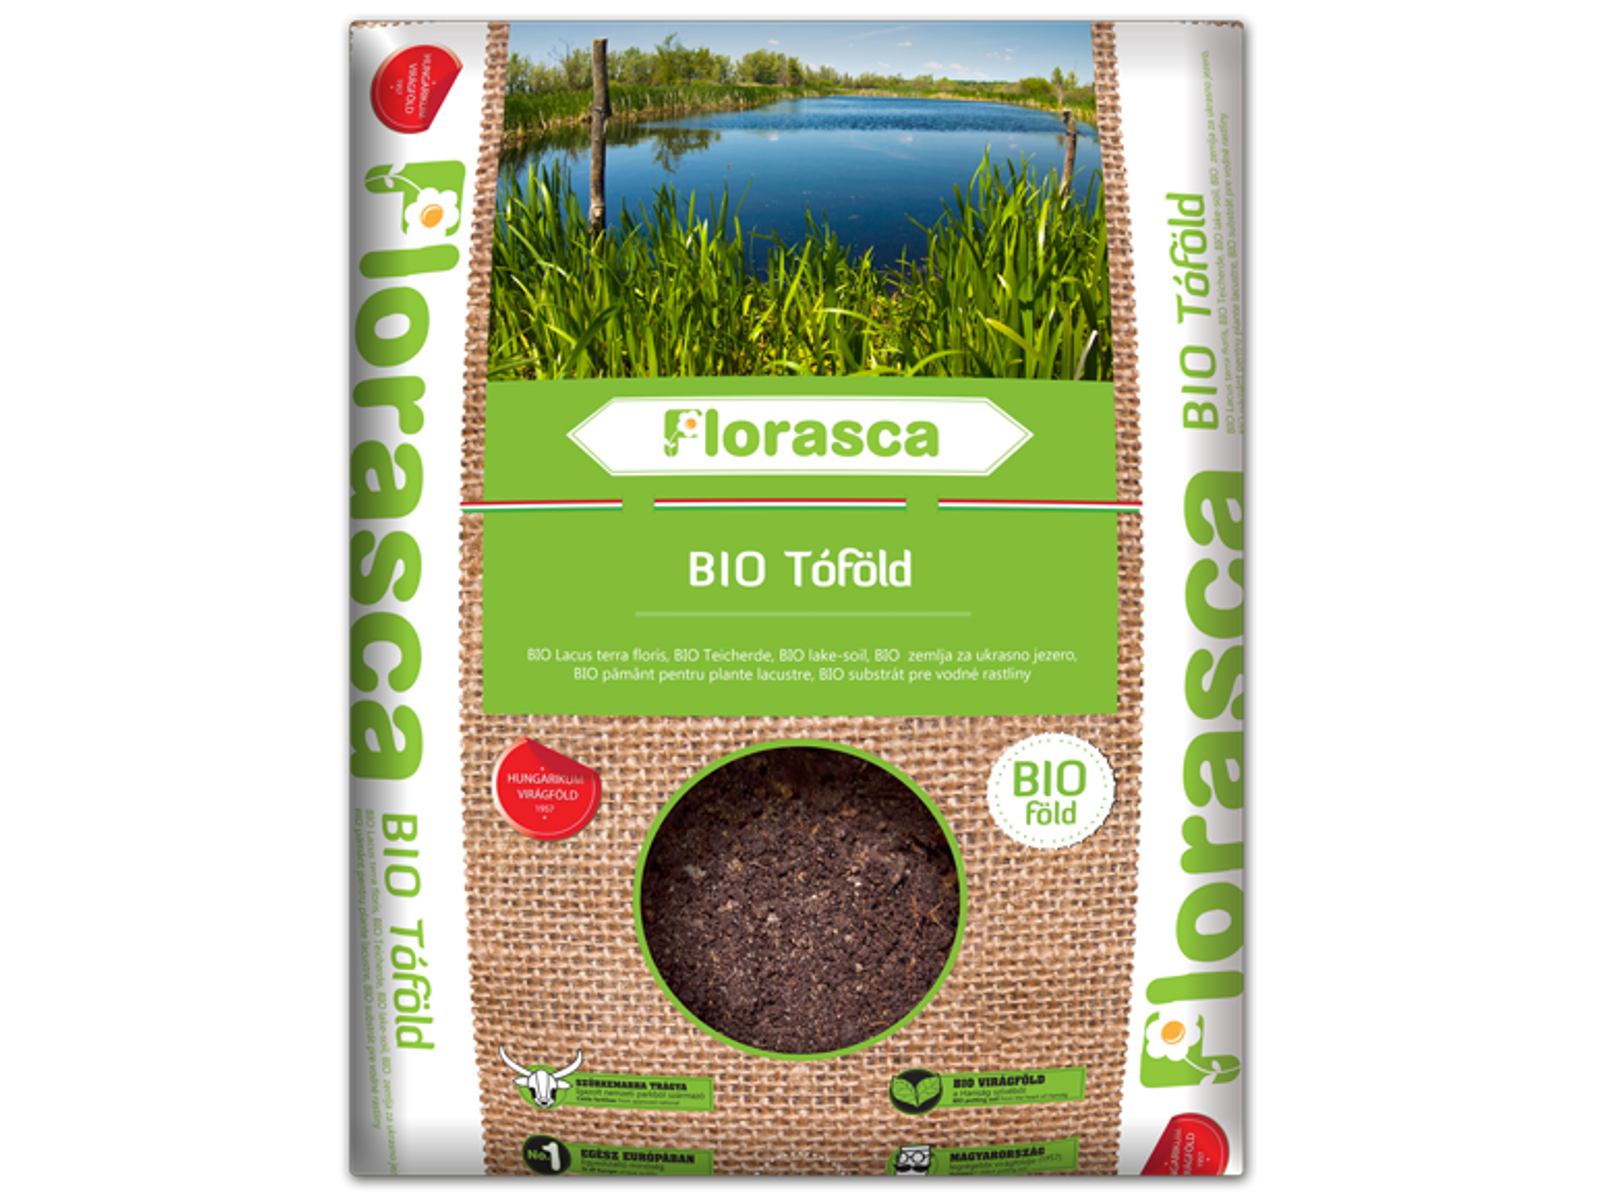 Florasca biotóföld - 20l